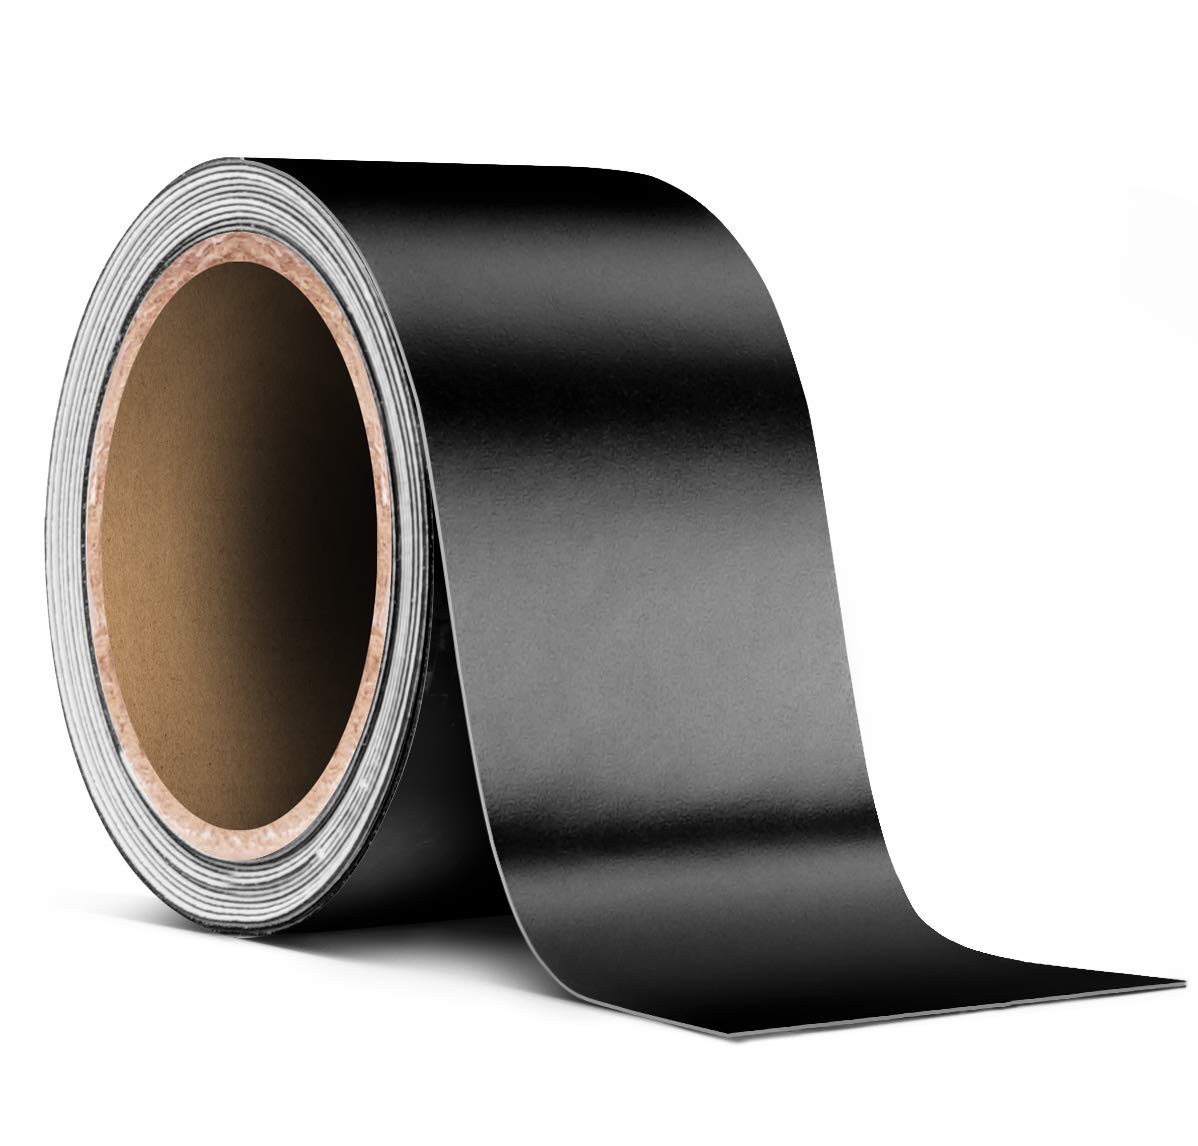 VViViD Dry Carbon Fibre Detailing Vinyl Wrap Tape 2 Inch x 20ft Roll DIY  (Black)